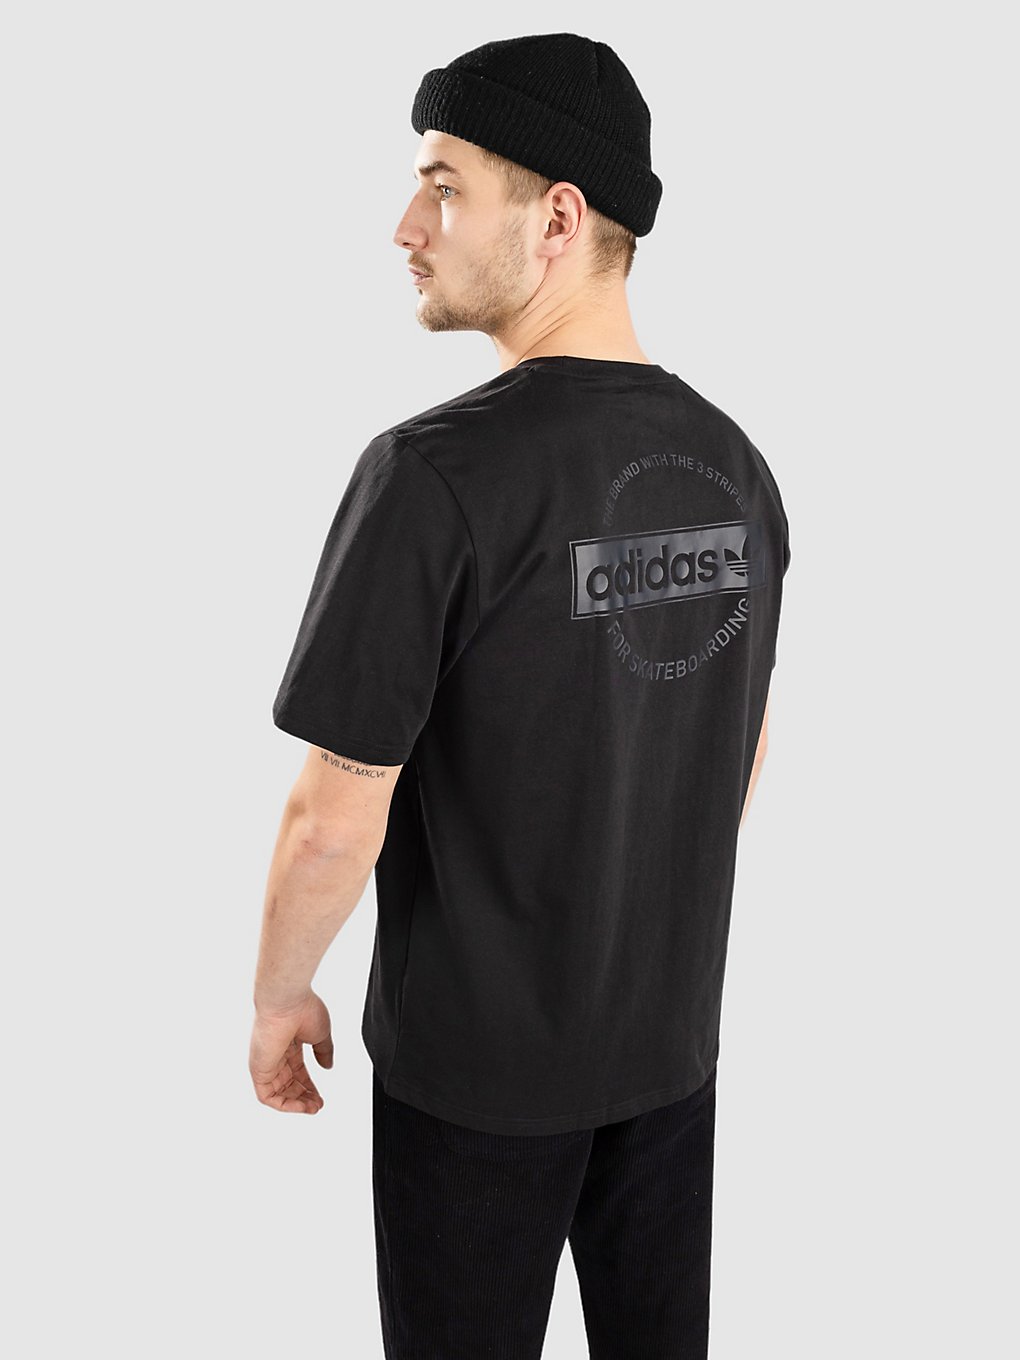 adidas Skateboarding 4.0 Circle T-Shirt carbon kaufen